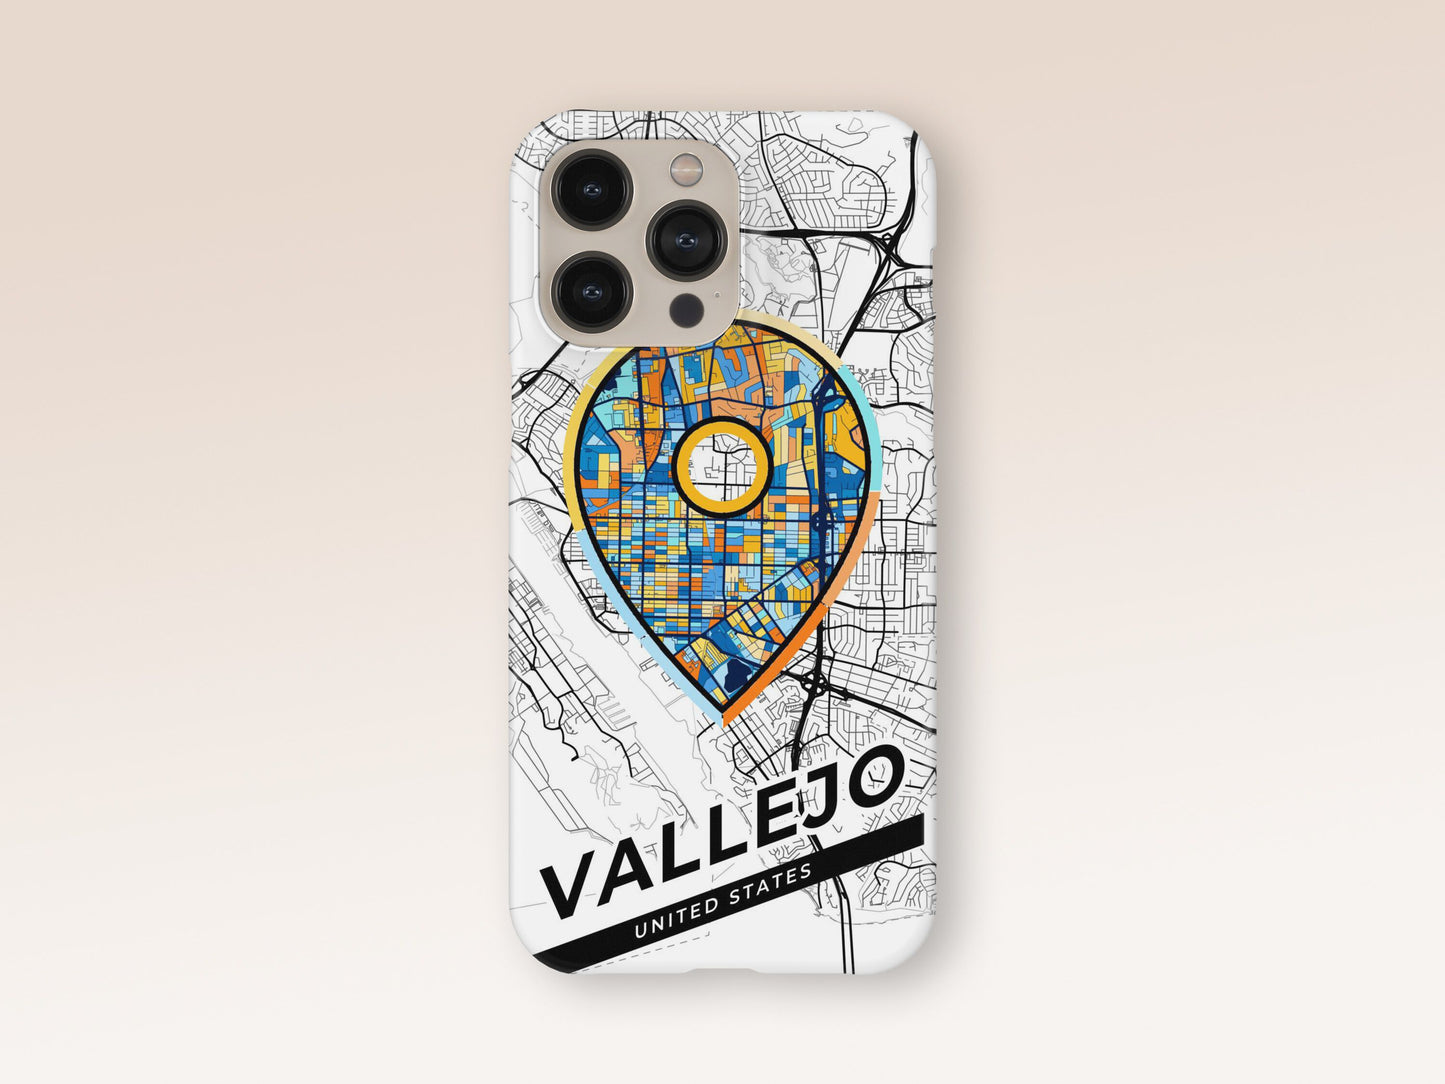 Vallejo California slim phone case with colorful icon 1